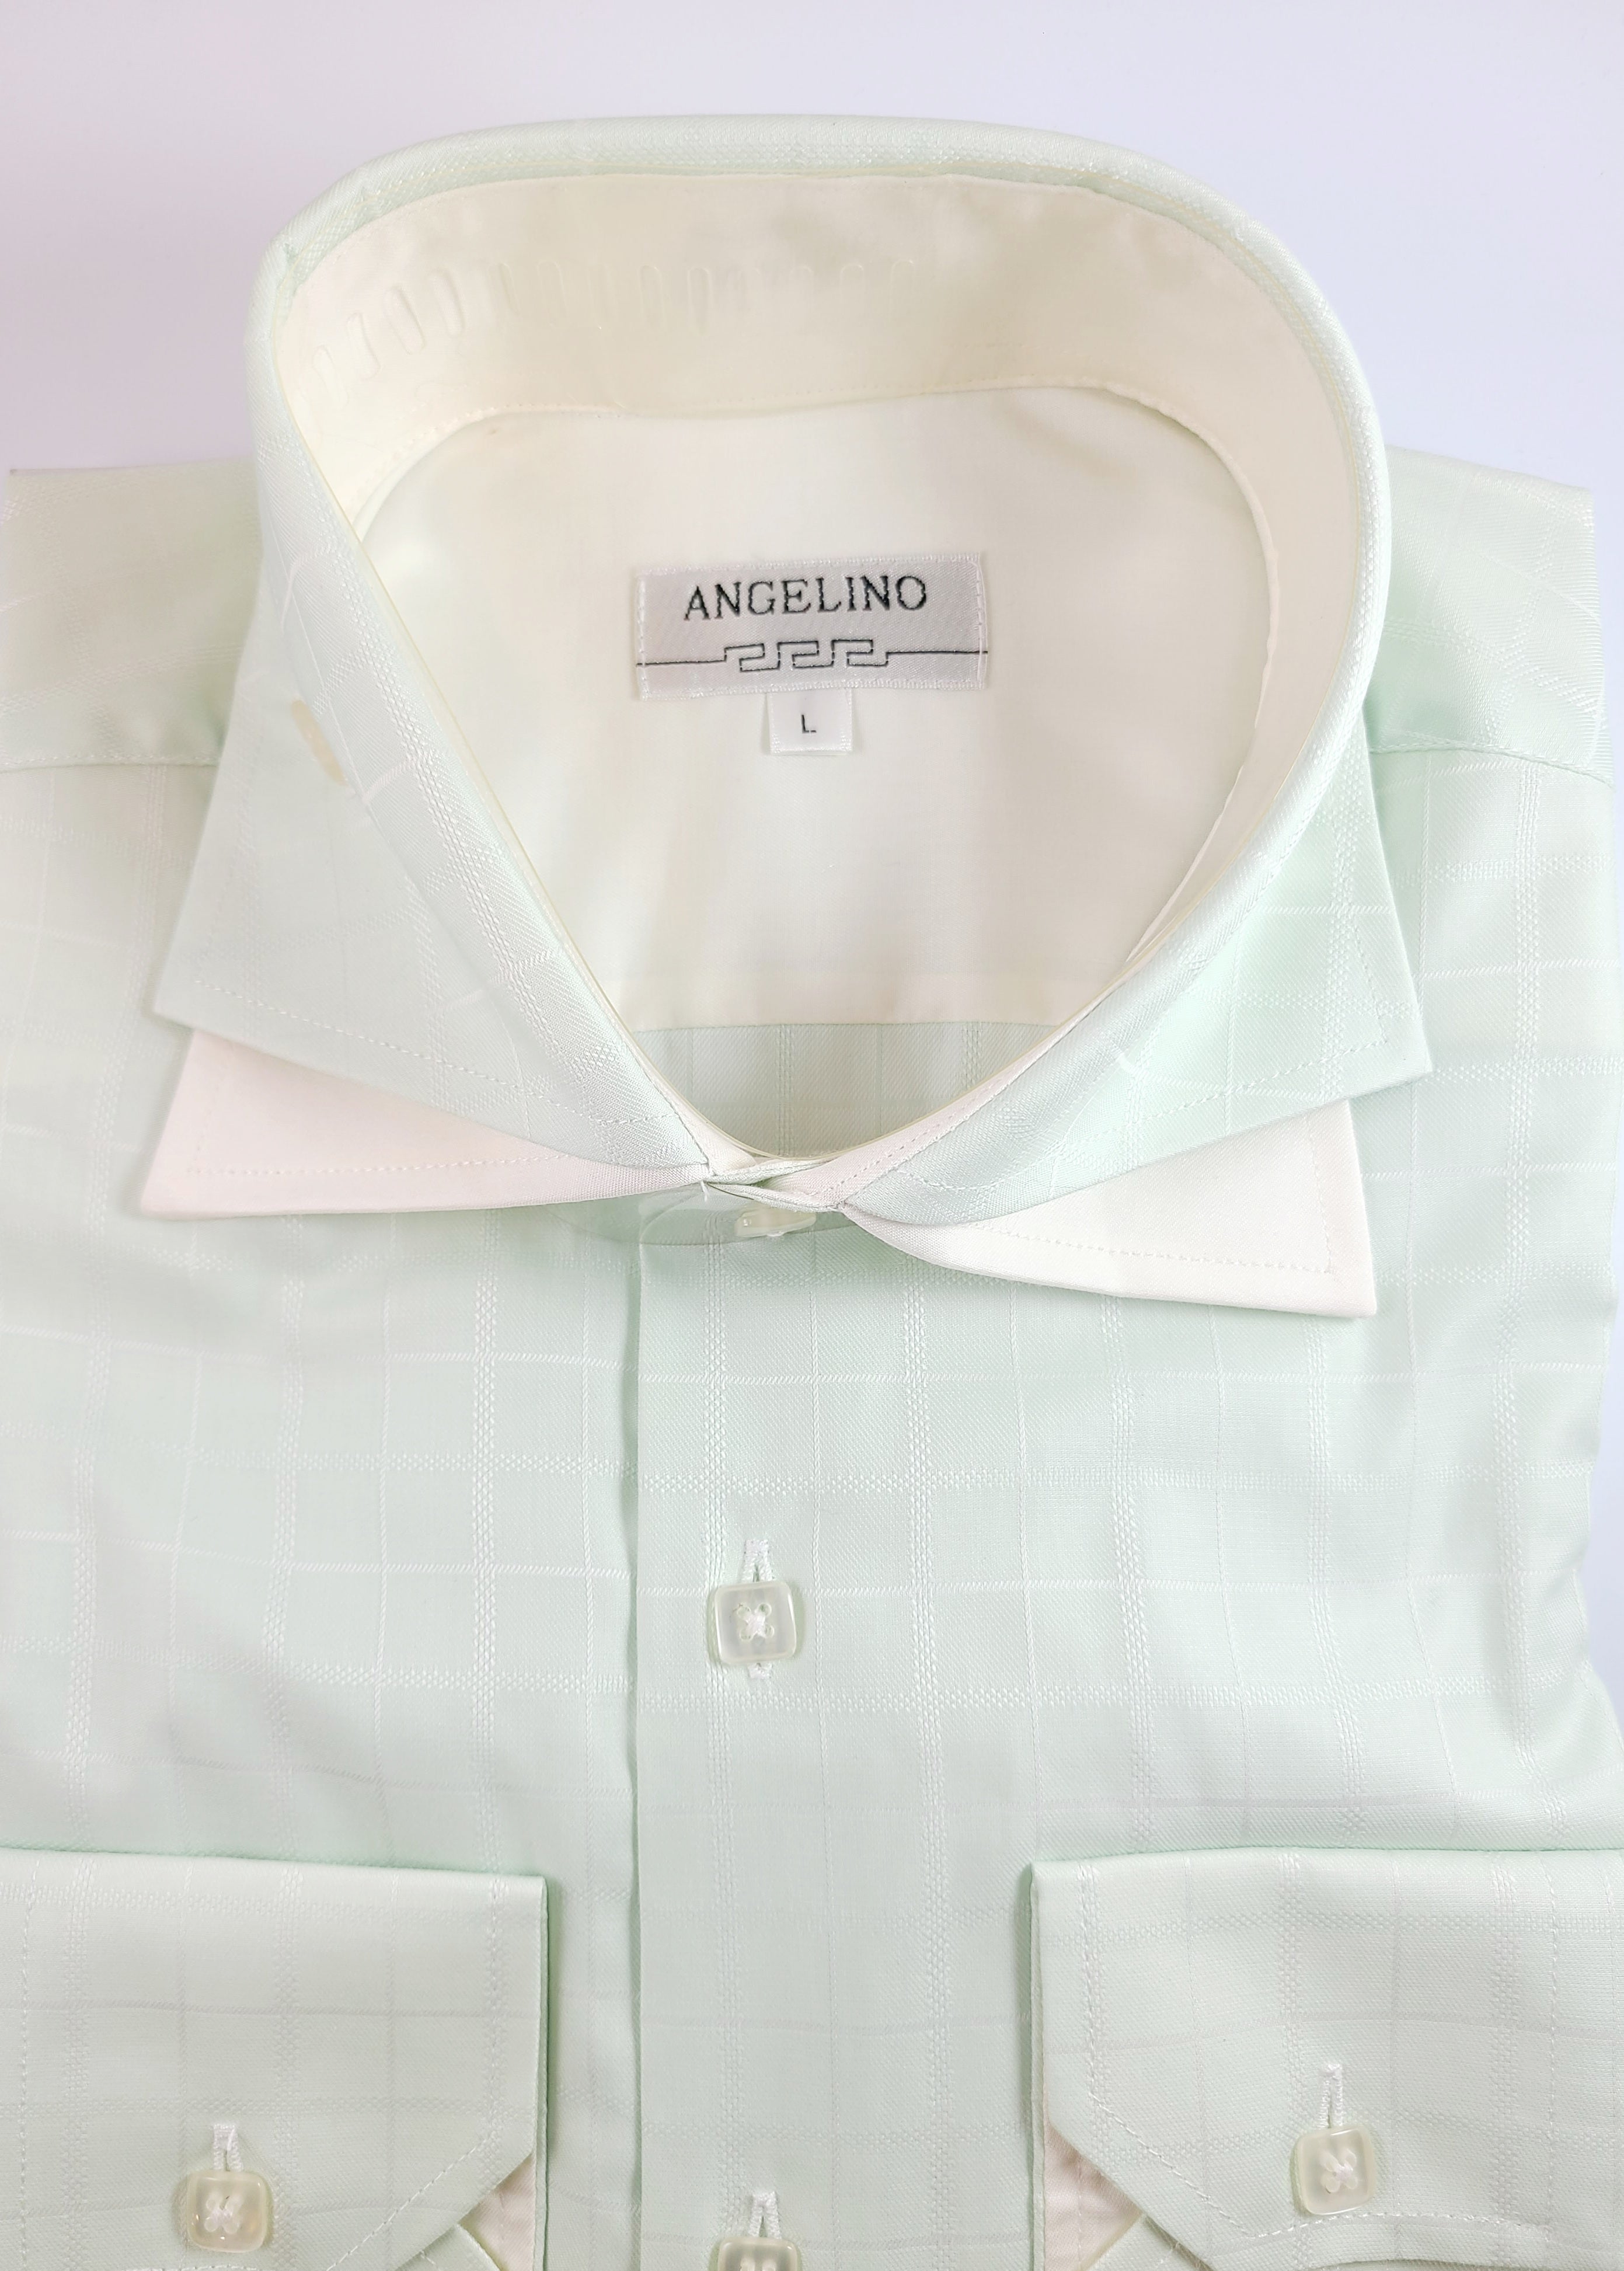 Angeleno Double Collar Plaid Shirt